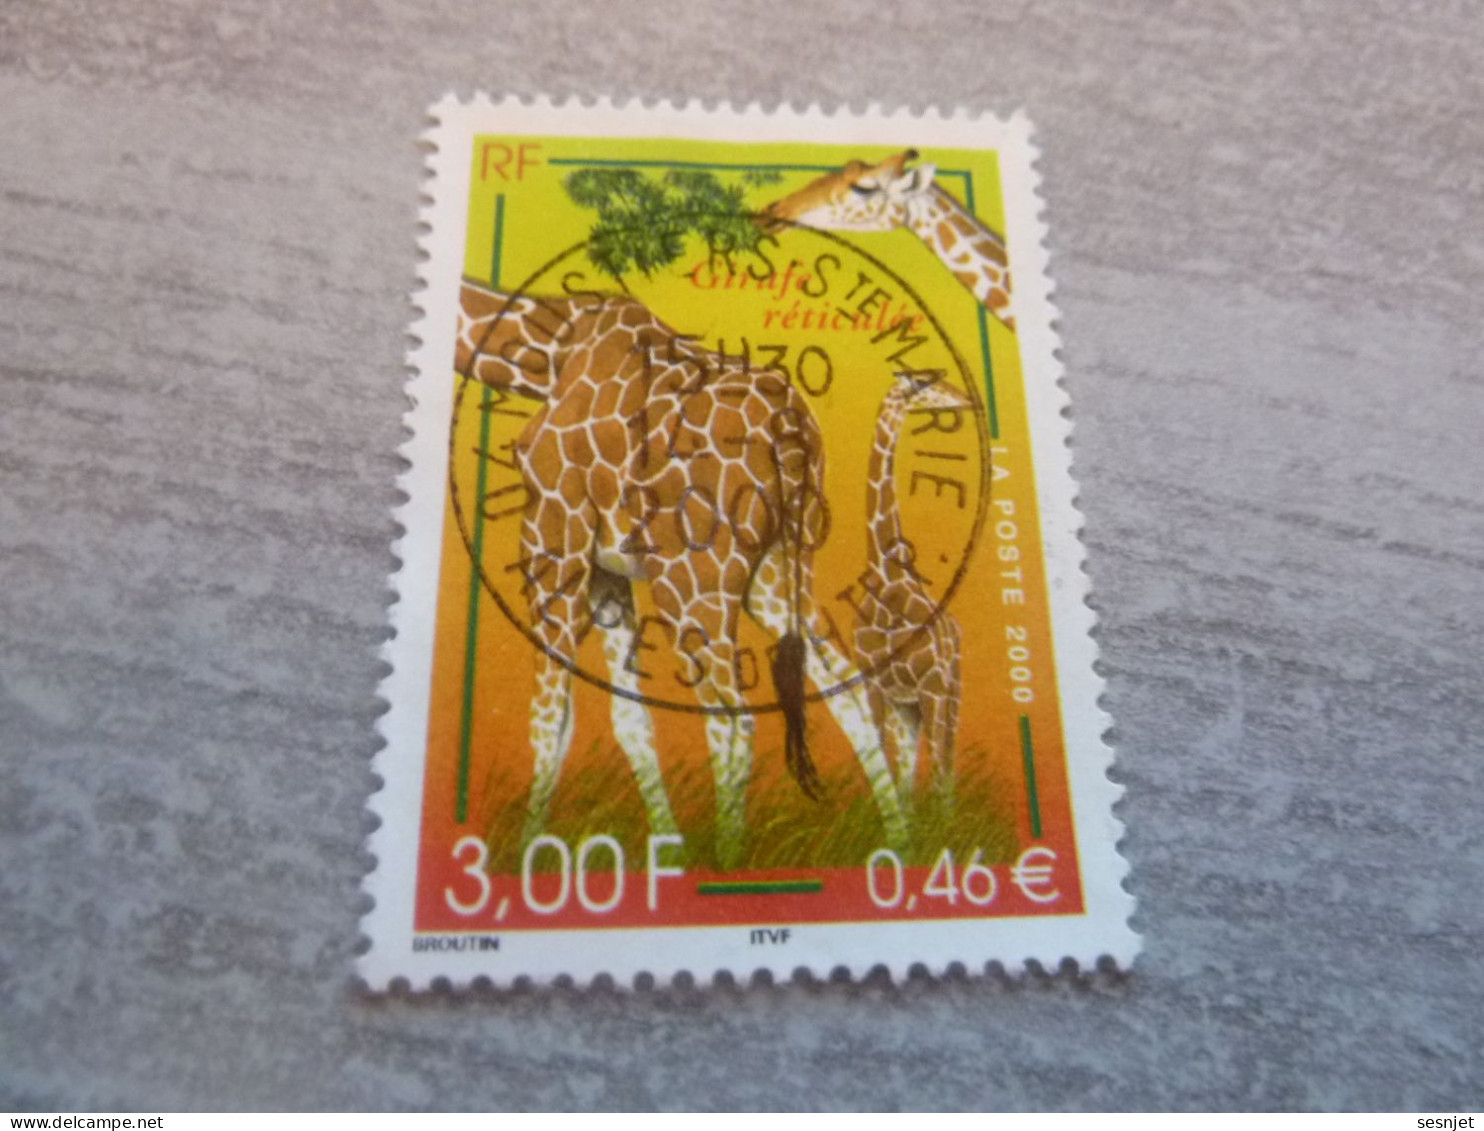 Girafe Réticulée - 3f. (0.46 €) - Yt 3333 - Multicolore - Oblitéré - Année 2000 - - Giraffe